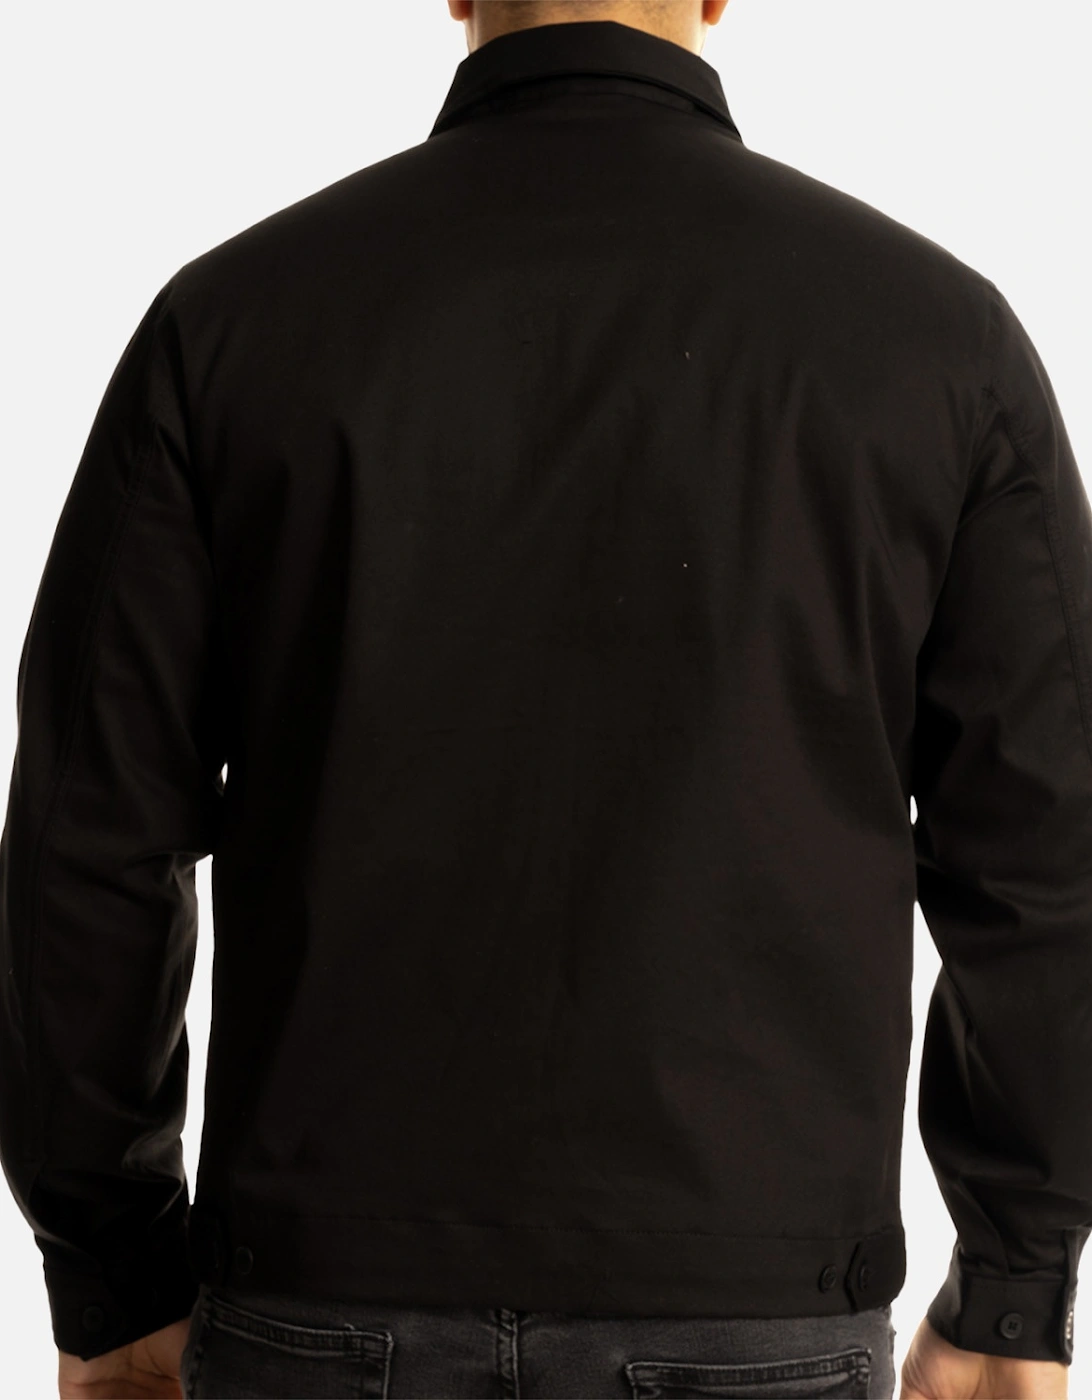 Mens Short Showerproof Cotton Jacket (Black)